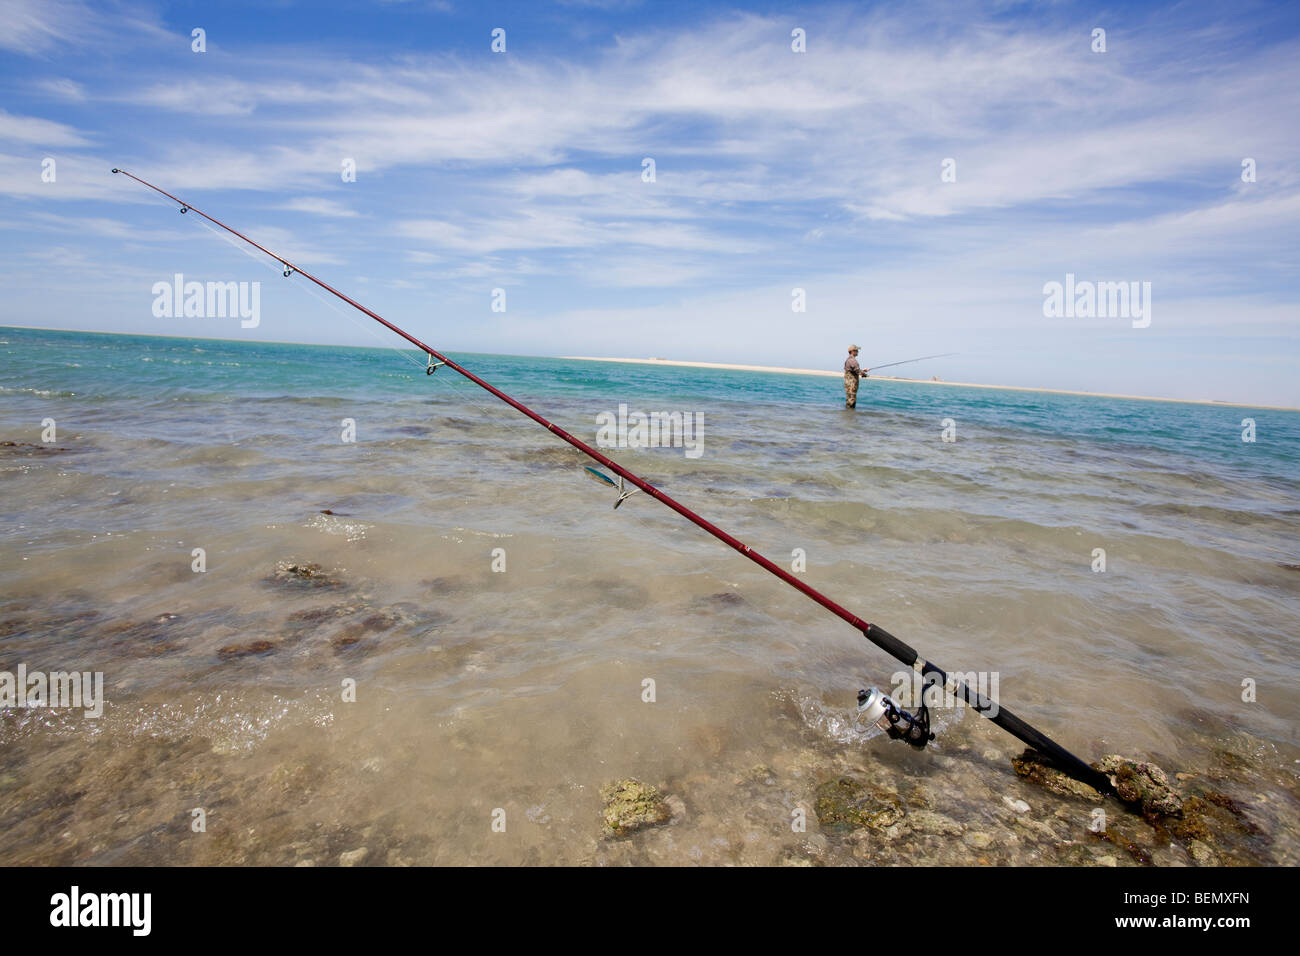 https://c8.alamy.com/comp/BEMXFN/fishing-rod-setup-along-the-beach-while-a-fisherman-seeks-his-catch-BEMXFN.jpg